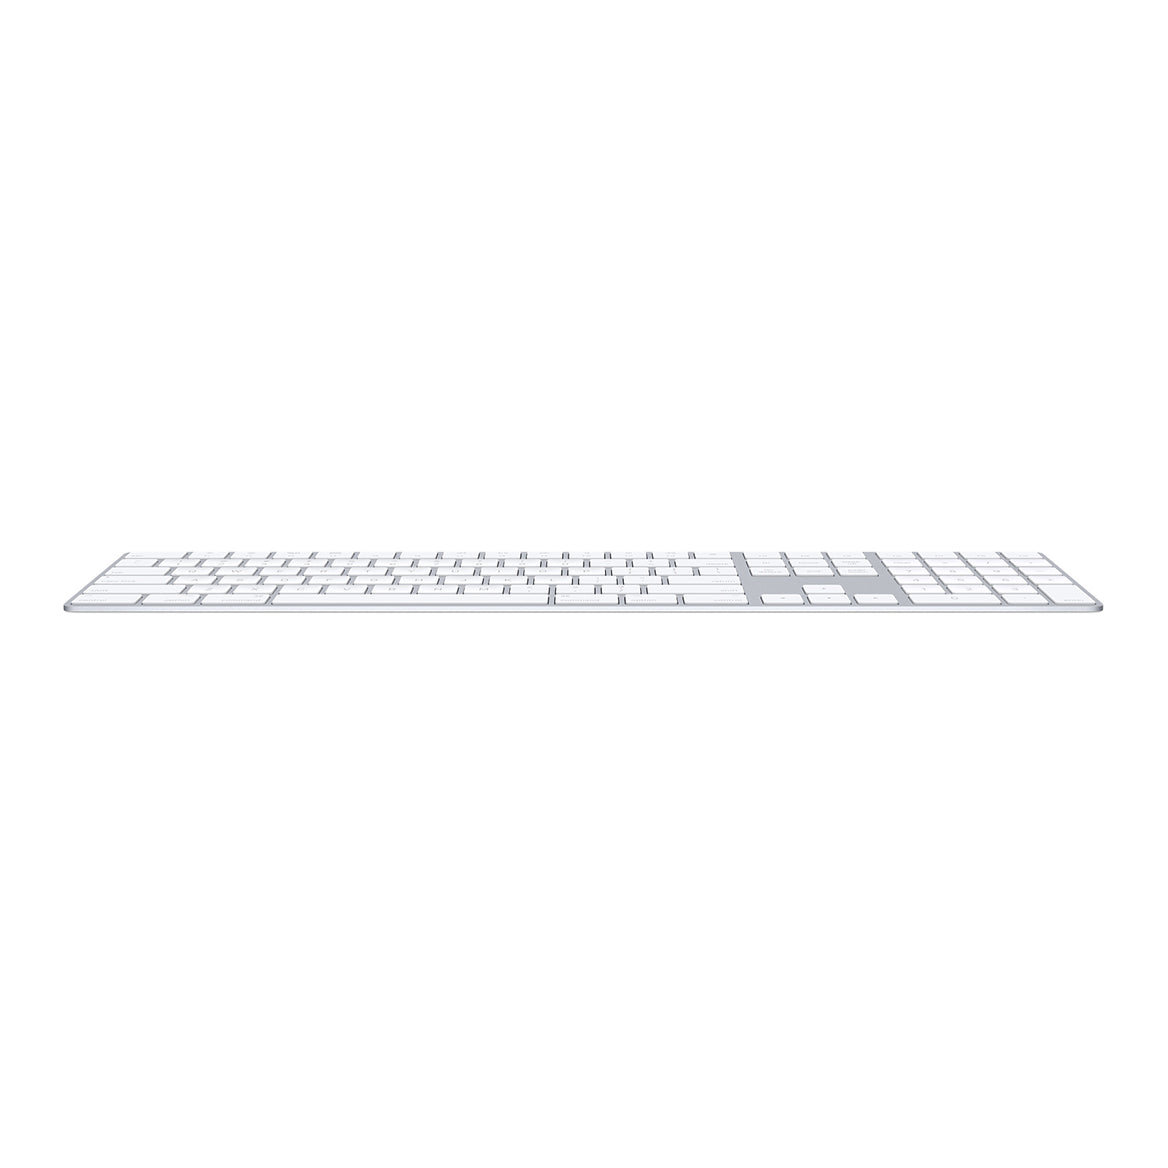 Magic Keyboard with Numeric Keypad - Silver